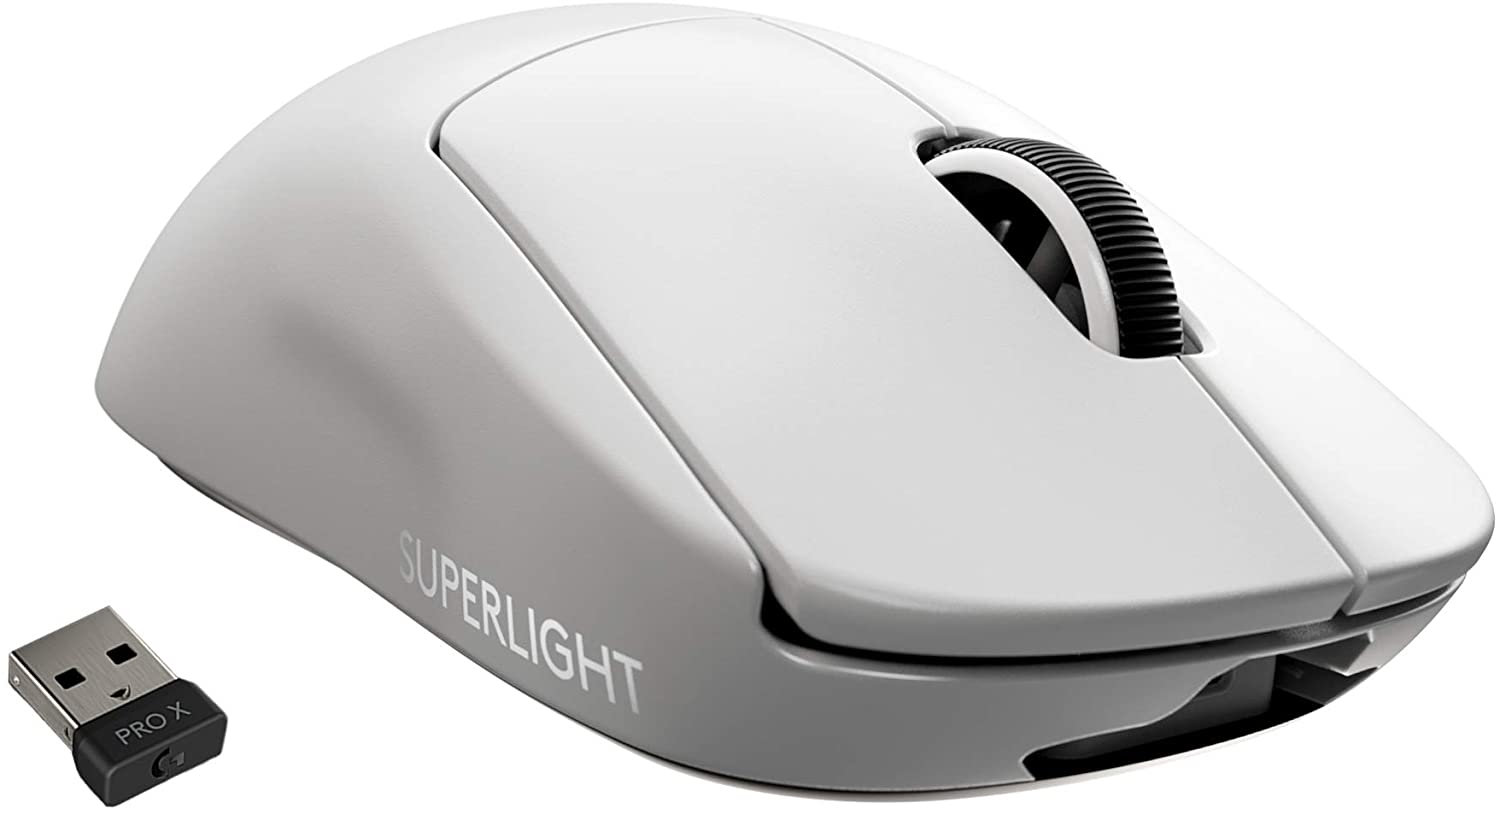 (B1) Logitech G PRO X SUPERLIGHT wireless gaming mouse with HERO 25K sensor, ultra-light at 63g